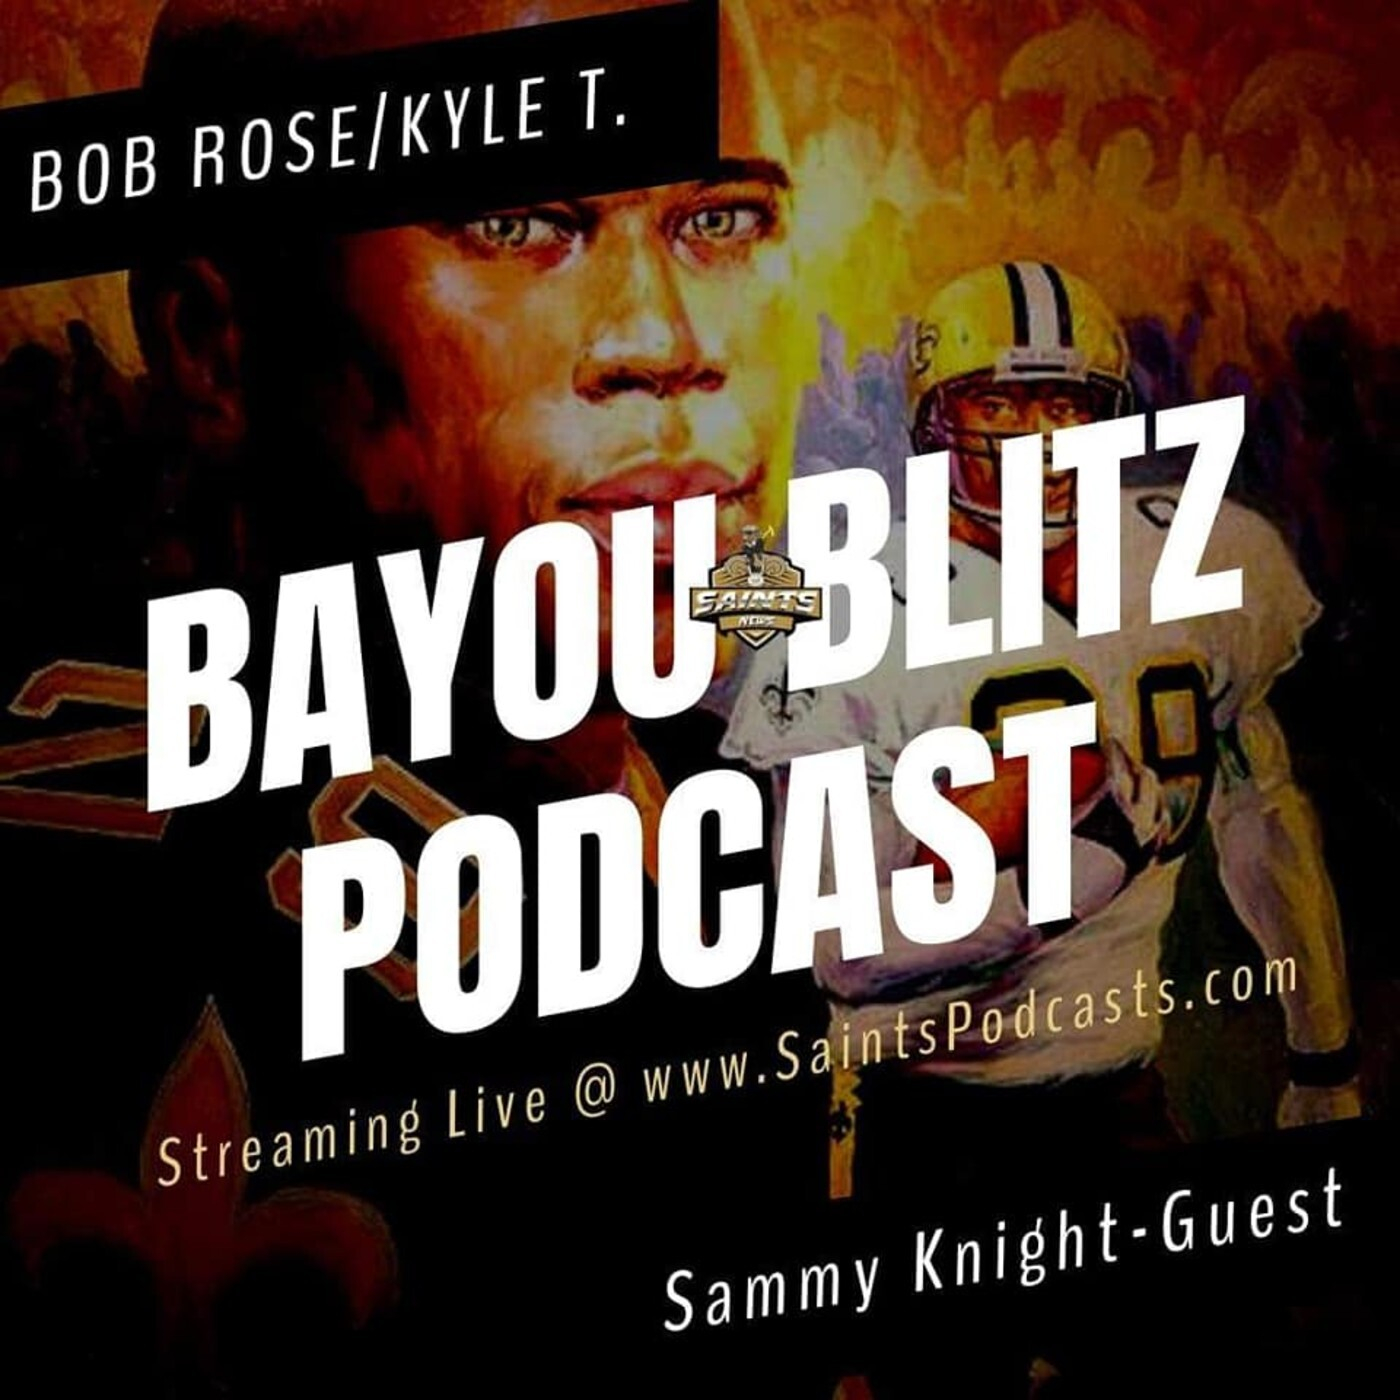 Bayou Blitz Podcast - Preview Saints-Bucs &amp; Guest Sammy Knight